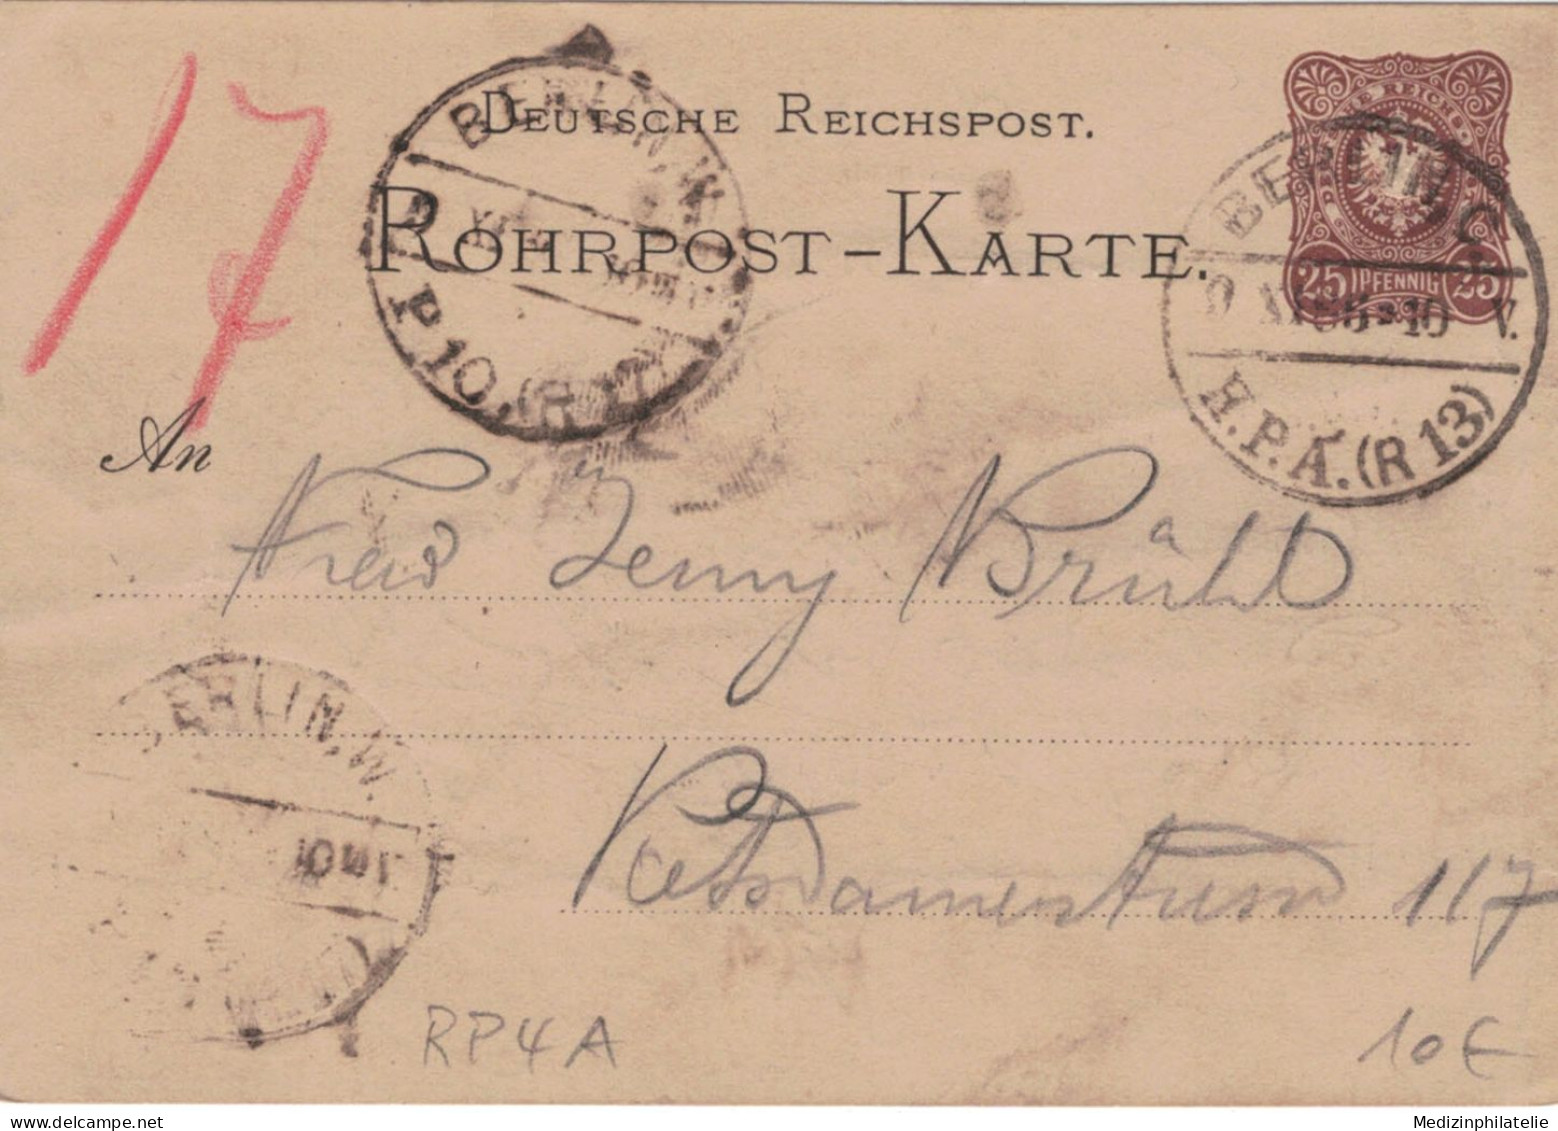 Rohrpost-Karte 25 Pf. Adler In Ellipse - 4 A - Berlin H.P.A. 1886 13 > 17 - Cartes Postales